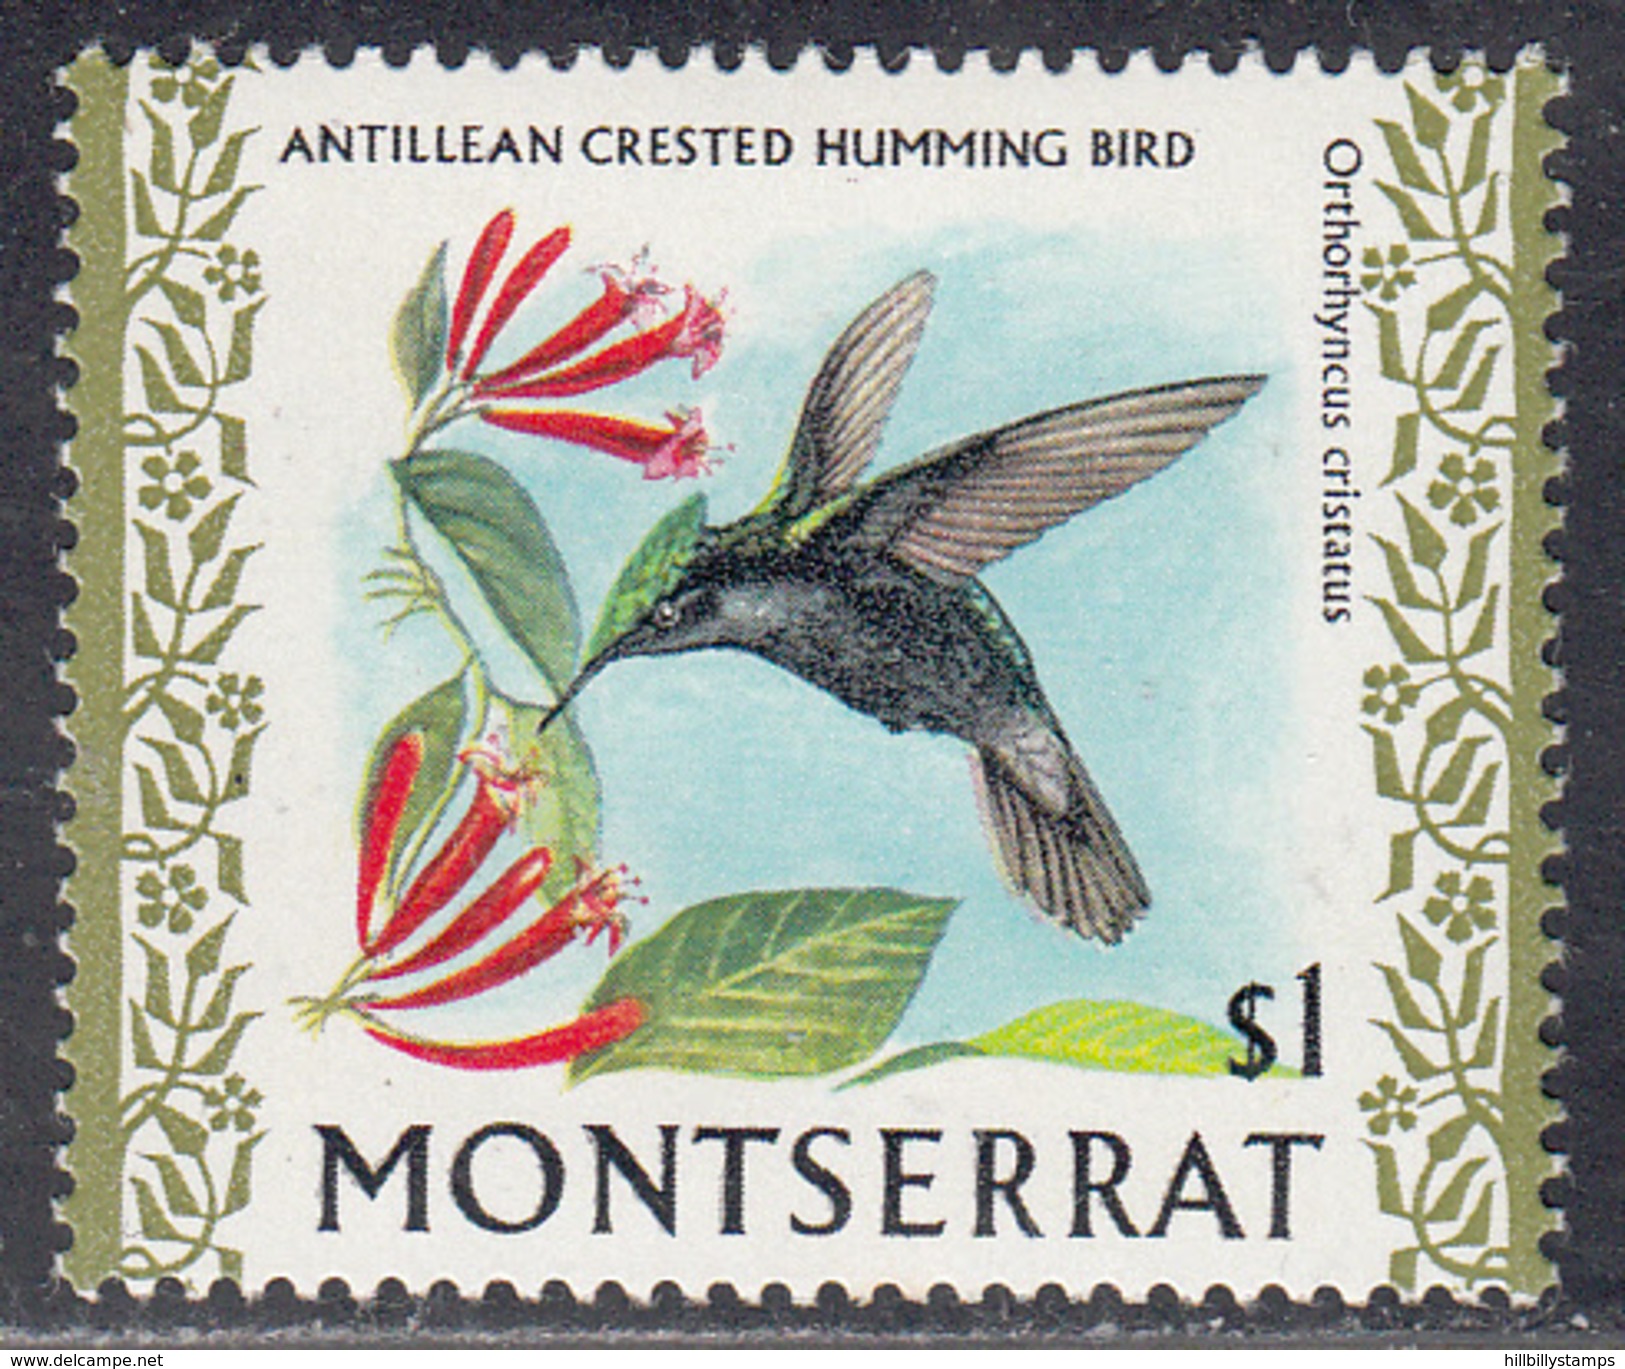 MONTSERRAT      SCOTT NO. 241      MINT HINGED      YEAR 1970 - Montserrat